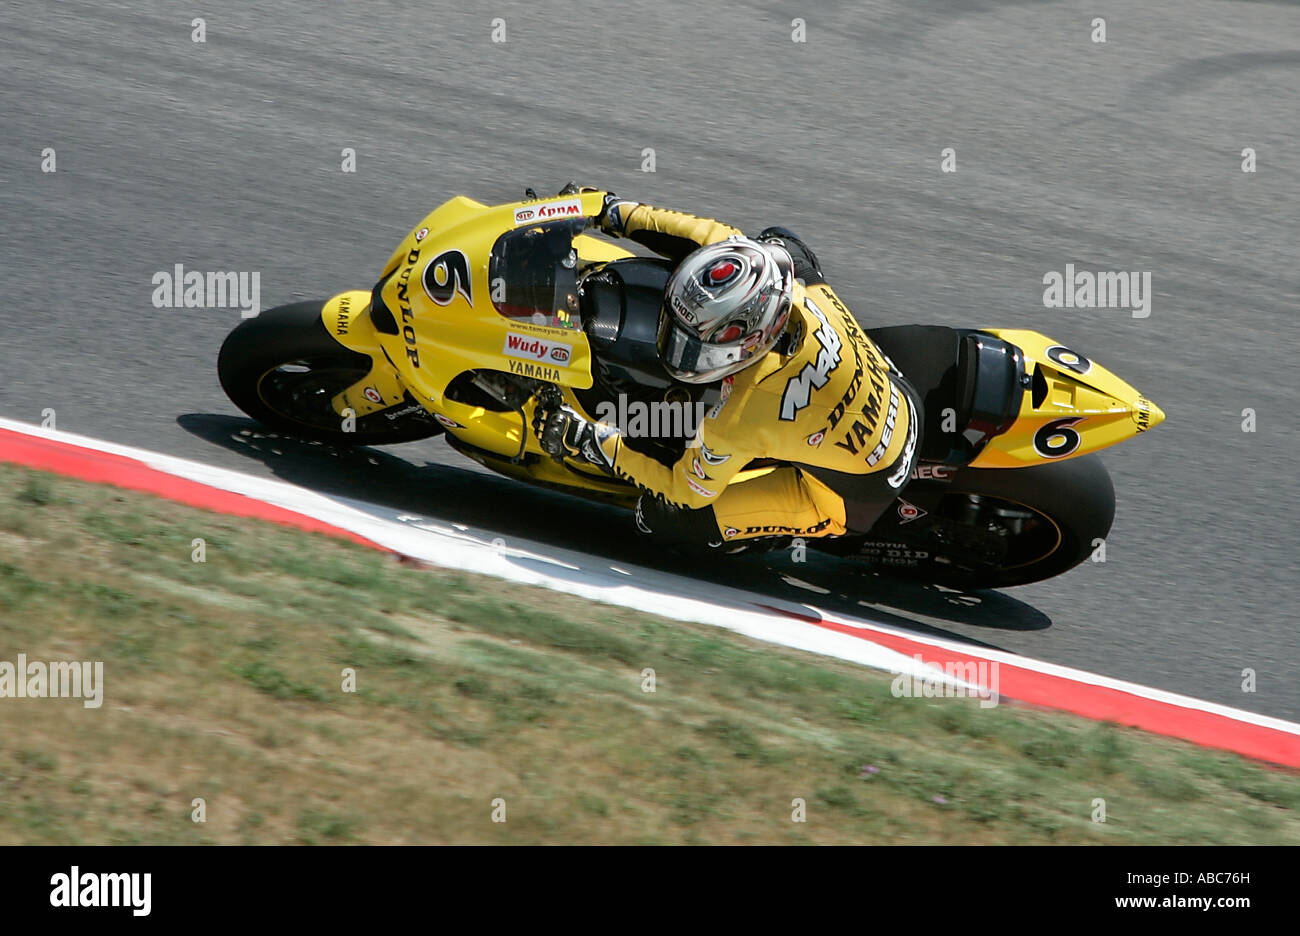 Makoto Tamada riding for the Dunlop Yamaha Tech 3 team in the 2007  Catalonia Moto GP, Montmelo, Barcelona, Spain Stock Photo - Alamy